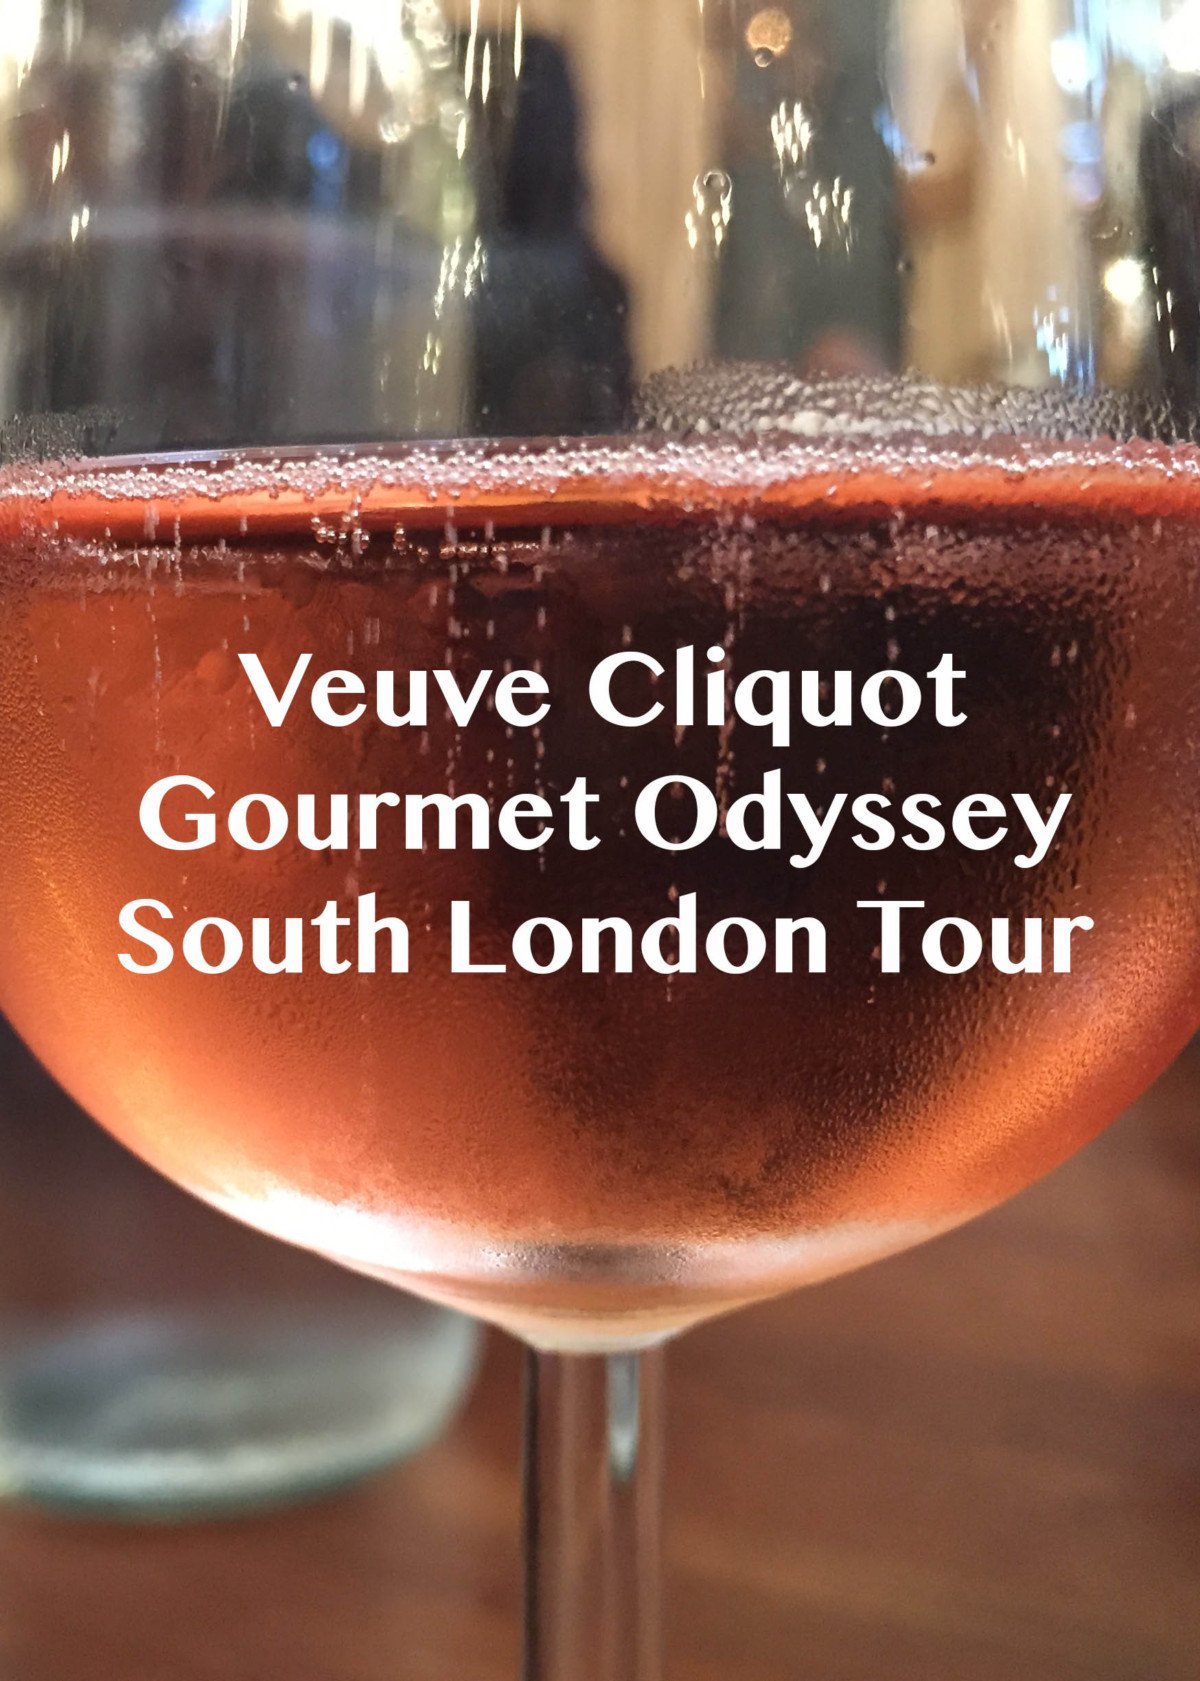 Veuve Cliquot Gourmet odyssey tour